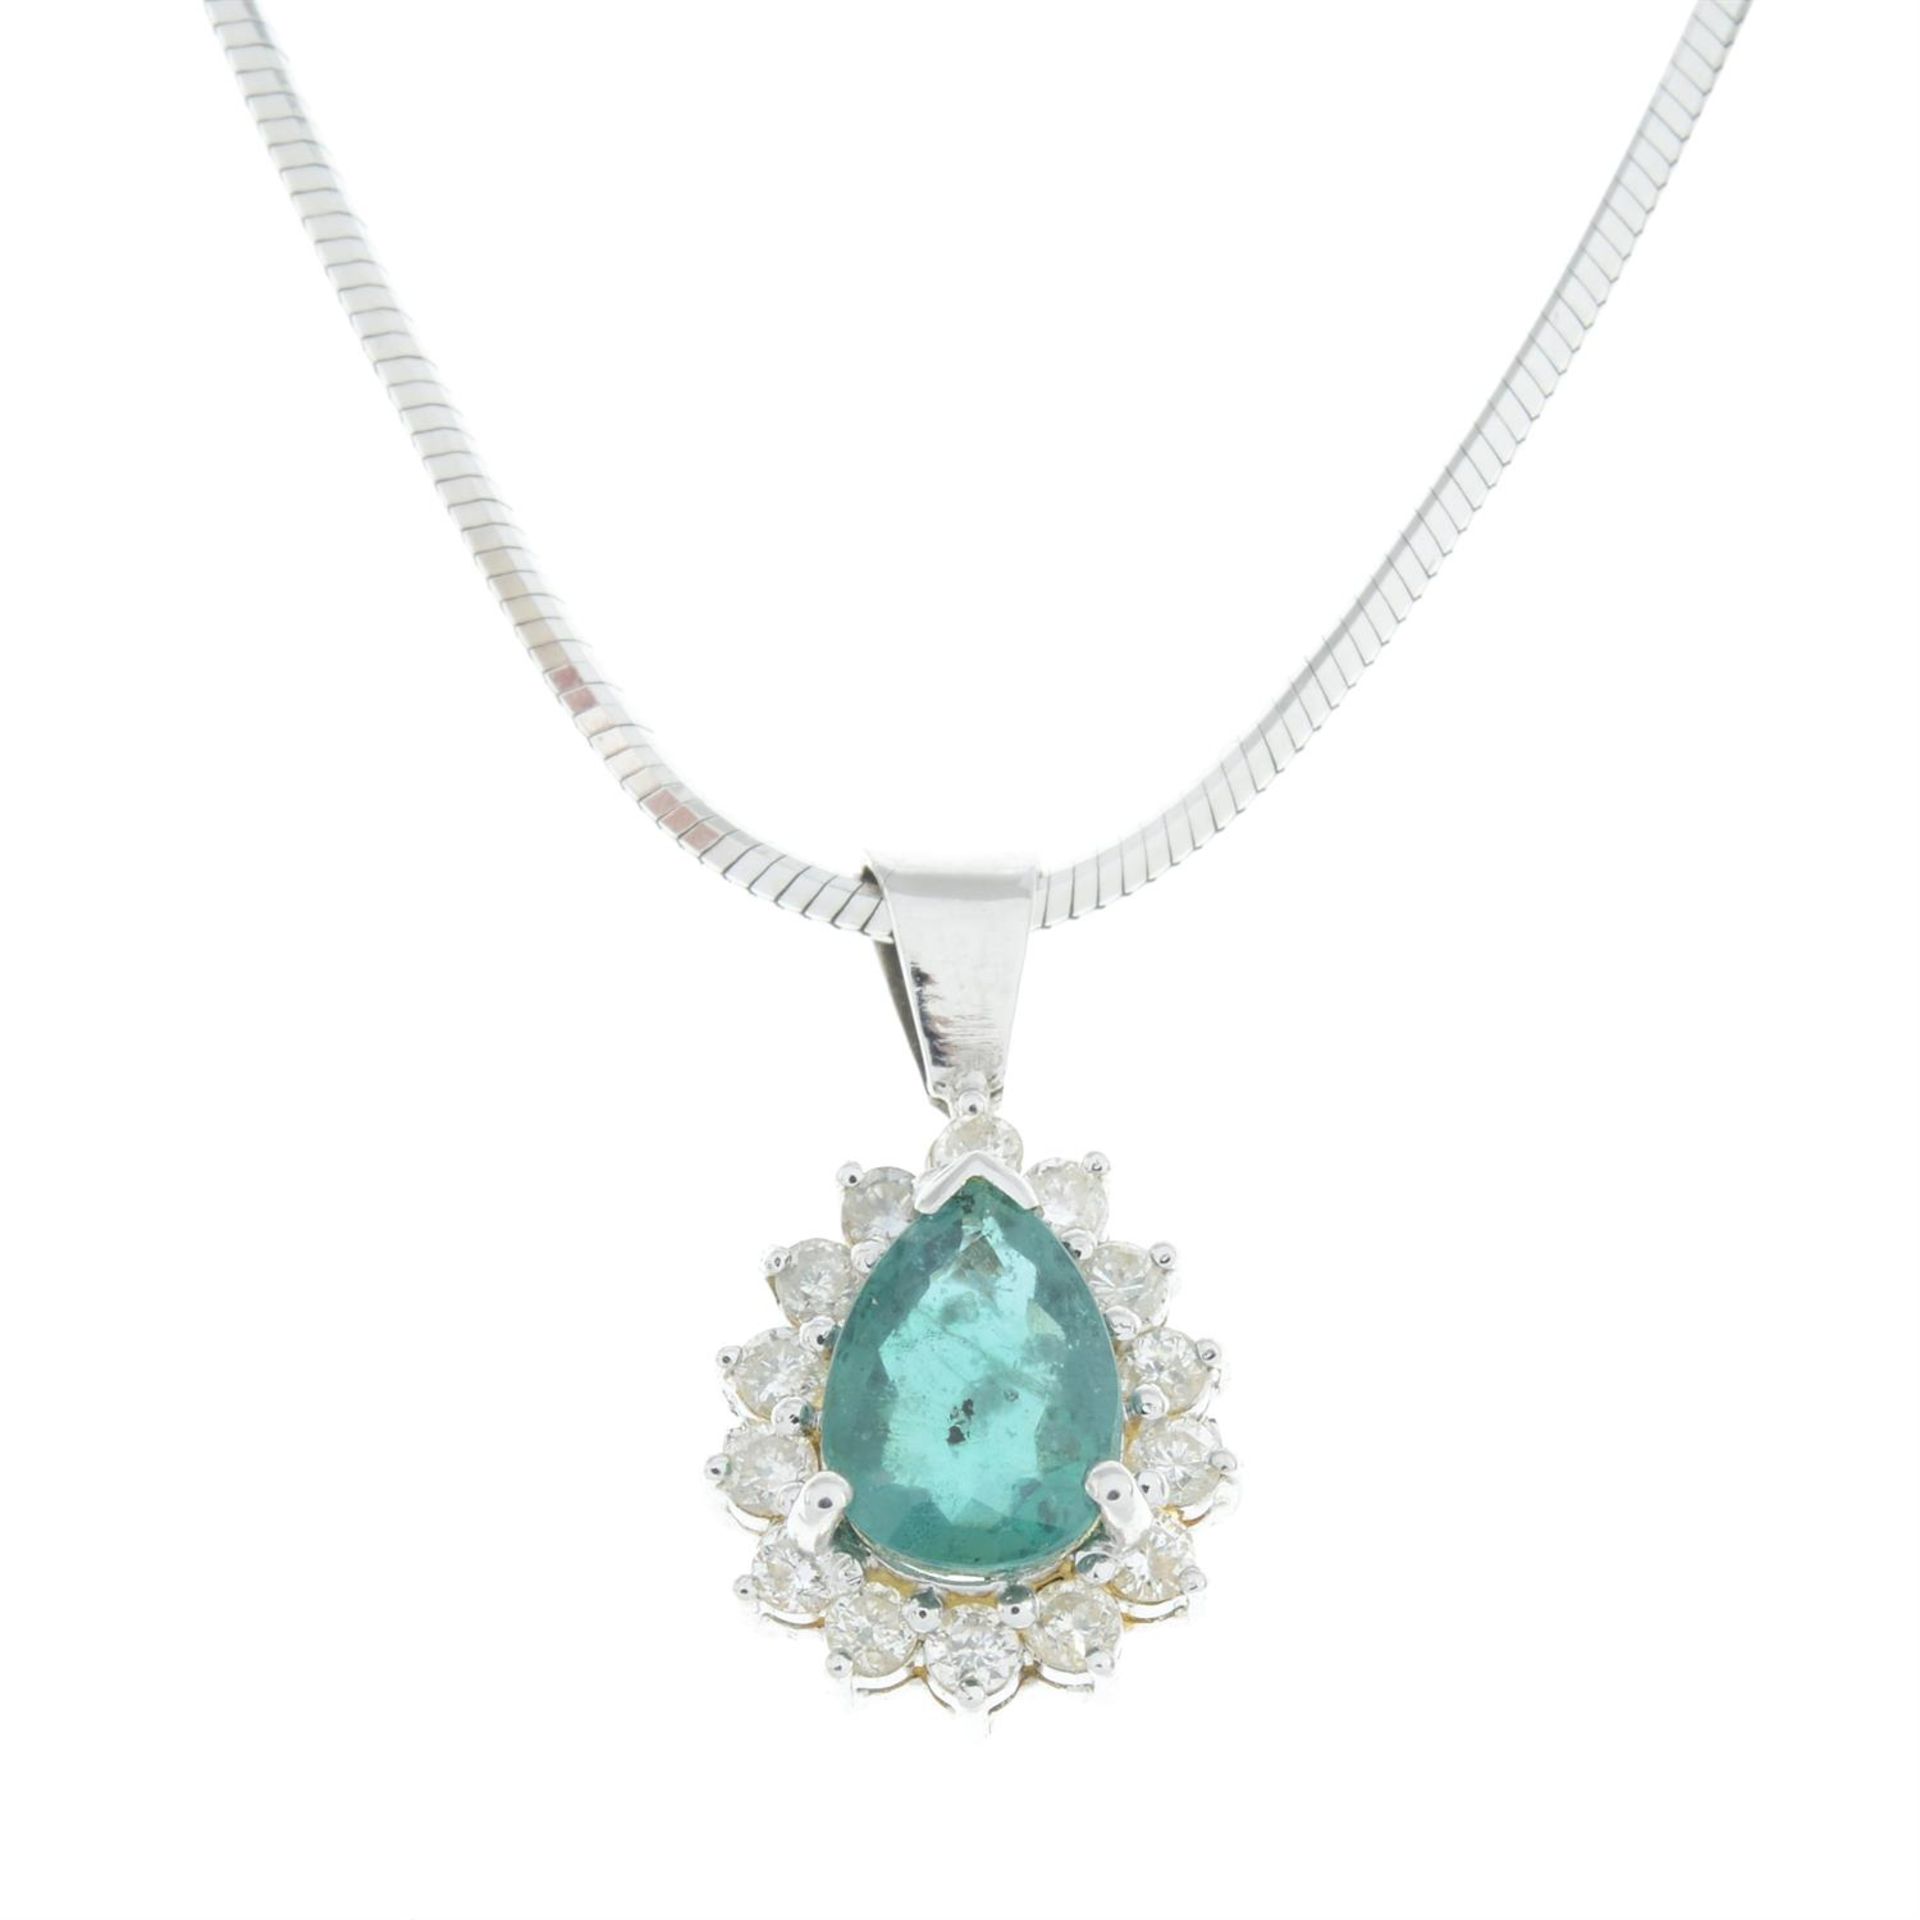 Emerald & diamond pendant, with 9ct gold chain